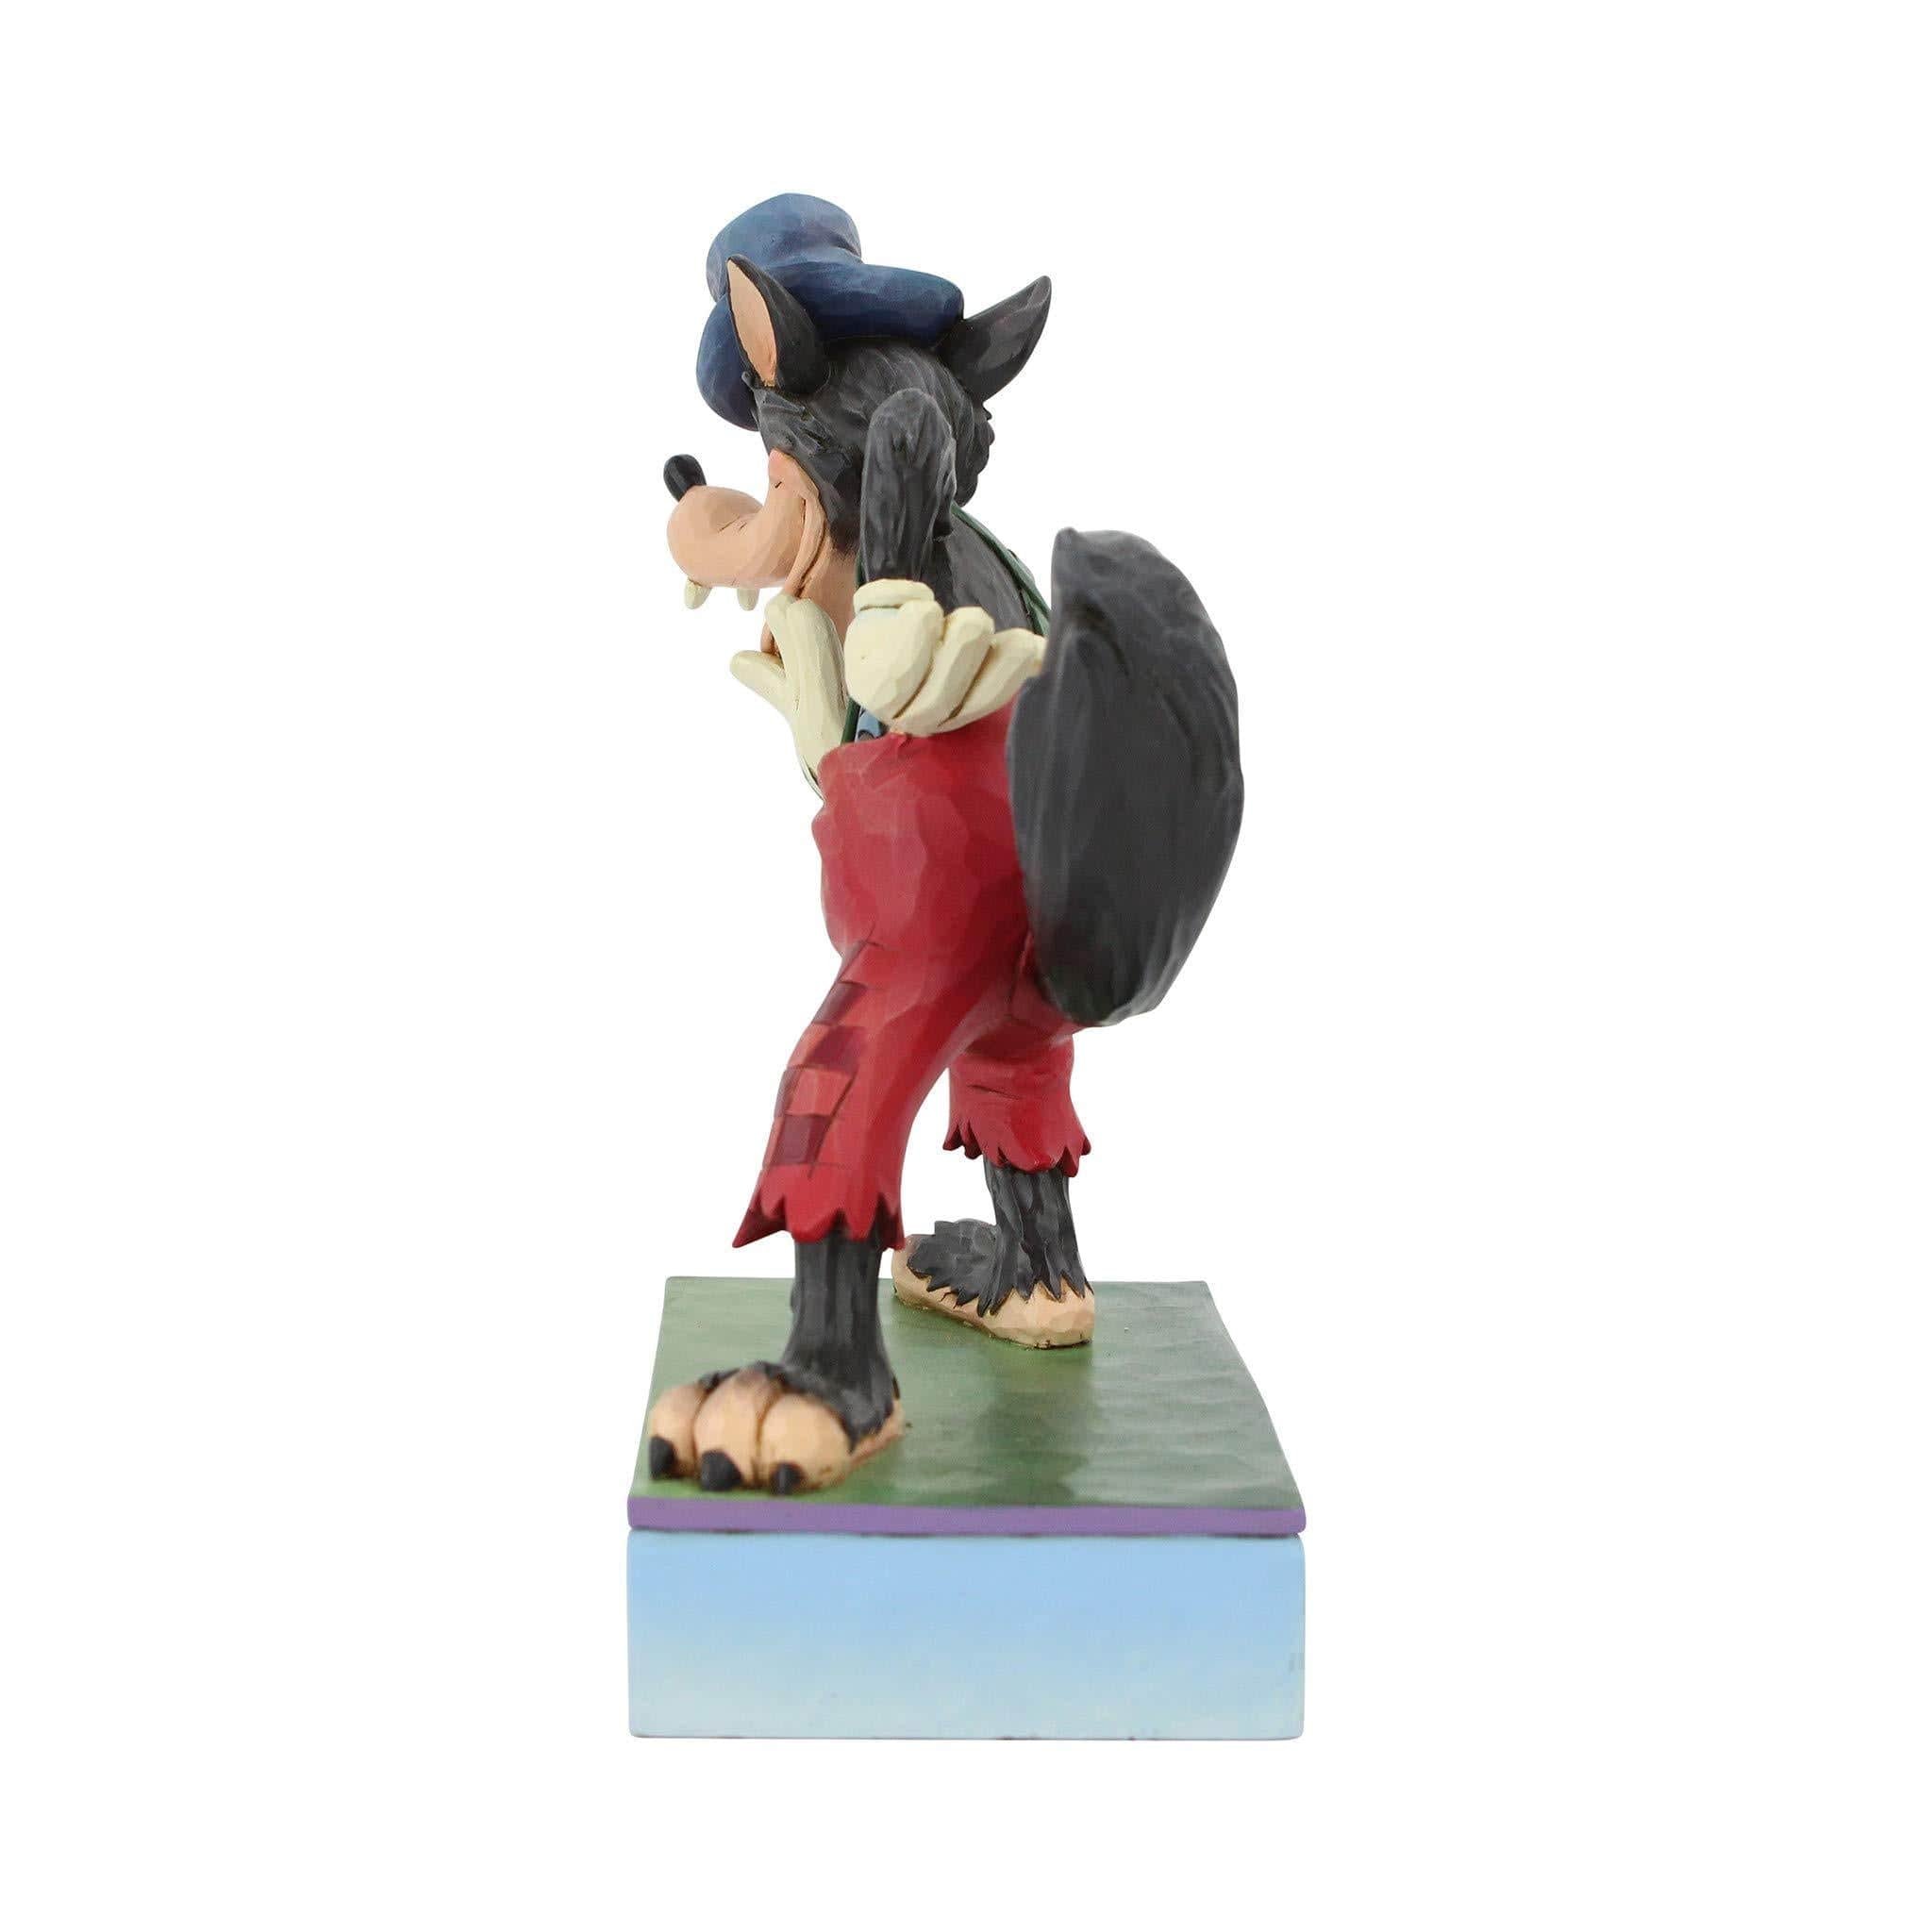 Enesco Disney Ornament Disney Traditions Figurine -  I'll Huff and I'll Puff! (Silly Symphony Big Bad Wolf)